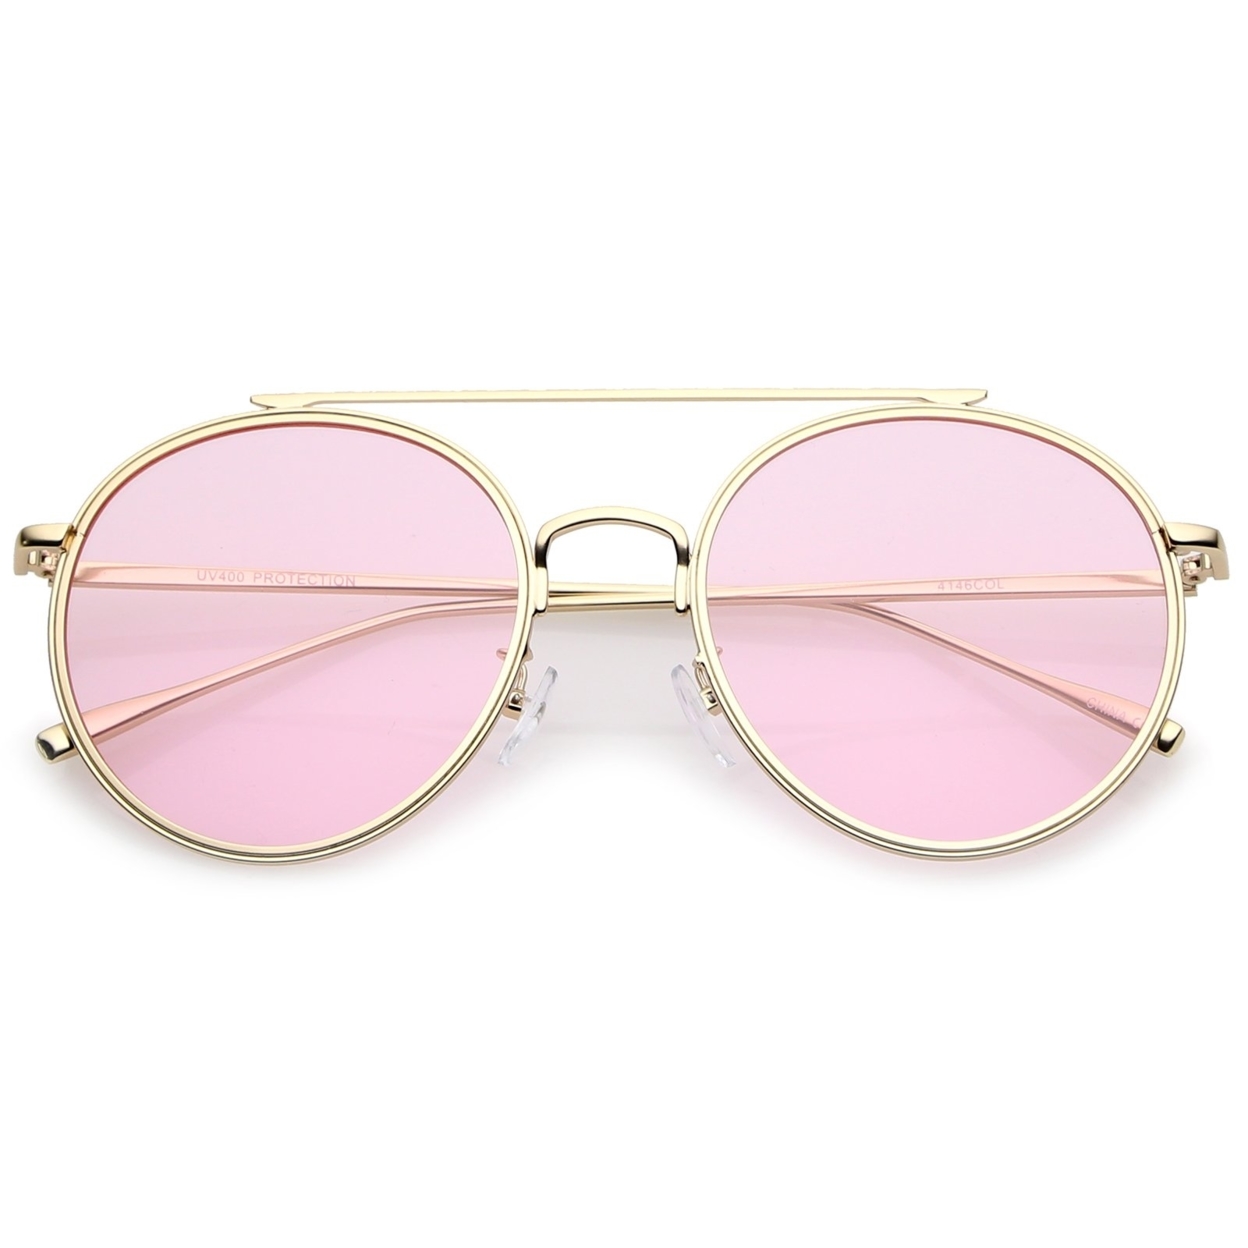 Modern Metal Crossbar Slim Temple Colored Flat Lens Round Aviator Sunglasses 54mm - Gold / Pink